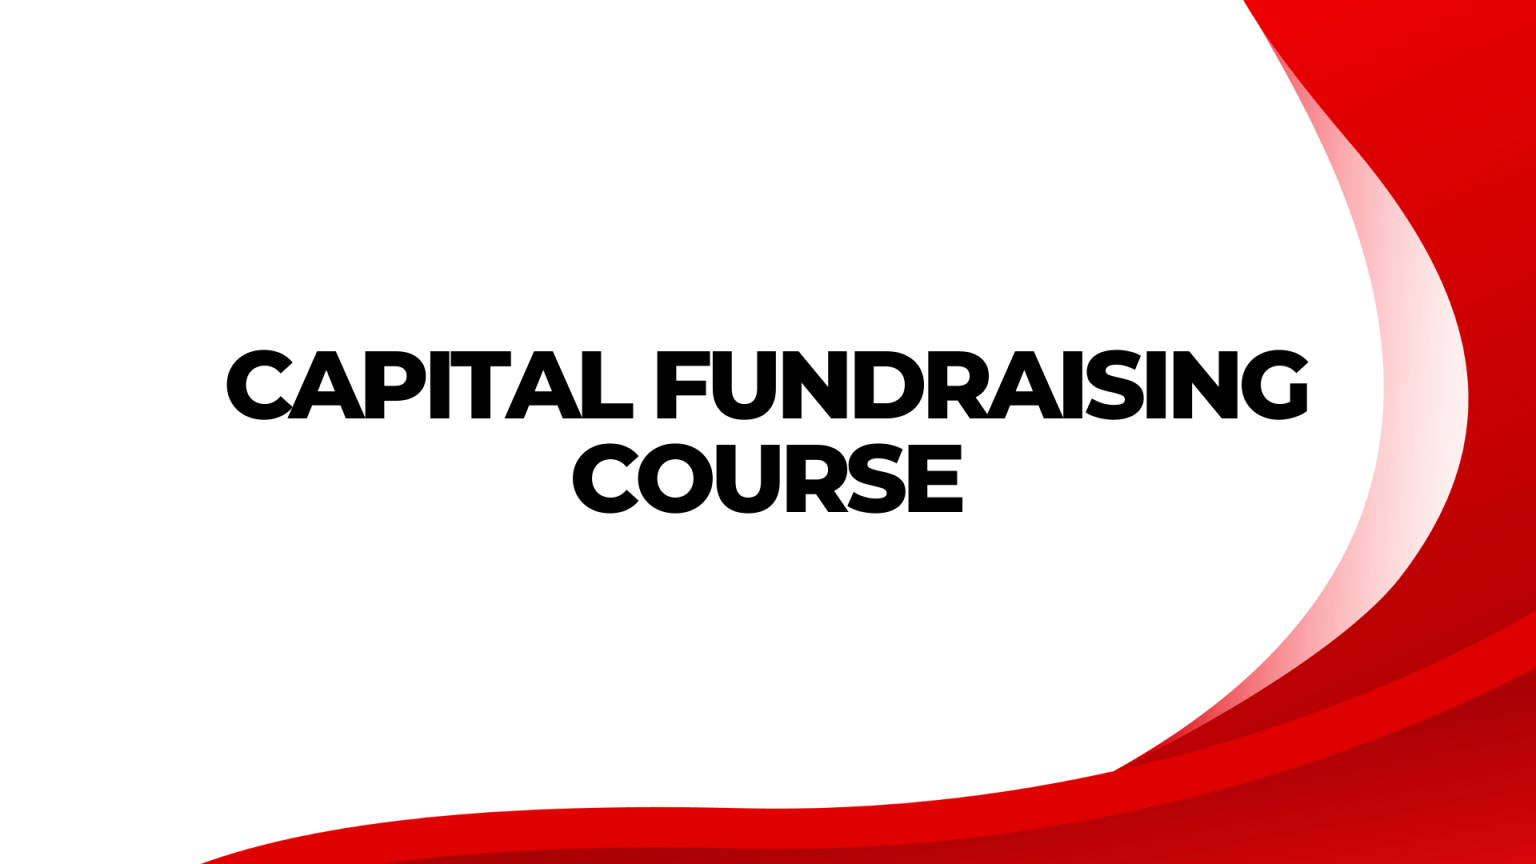 Capital fund raising course